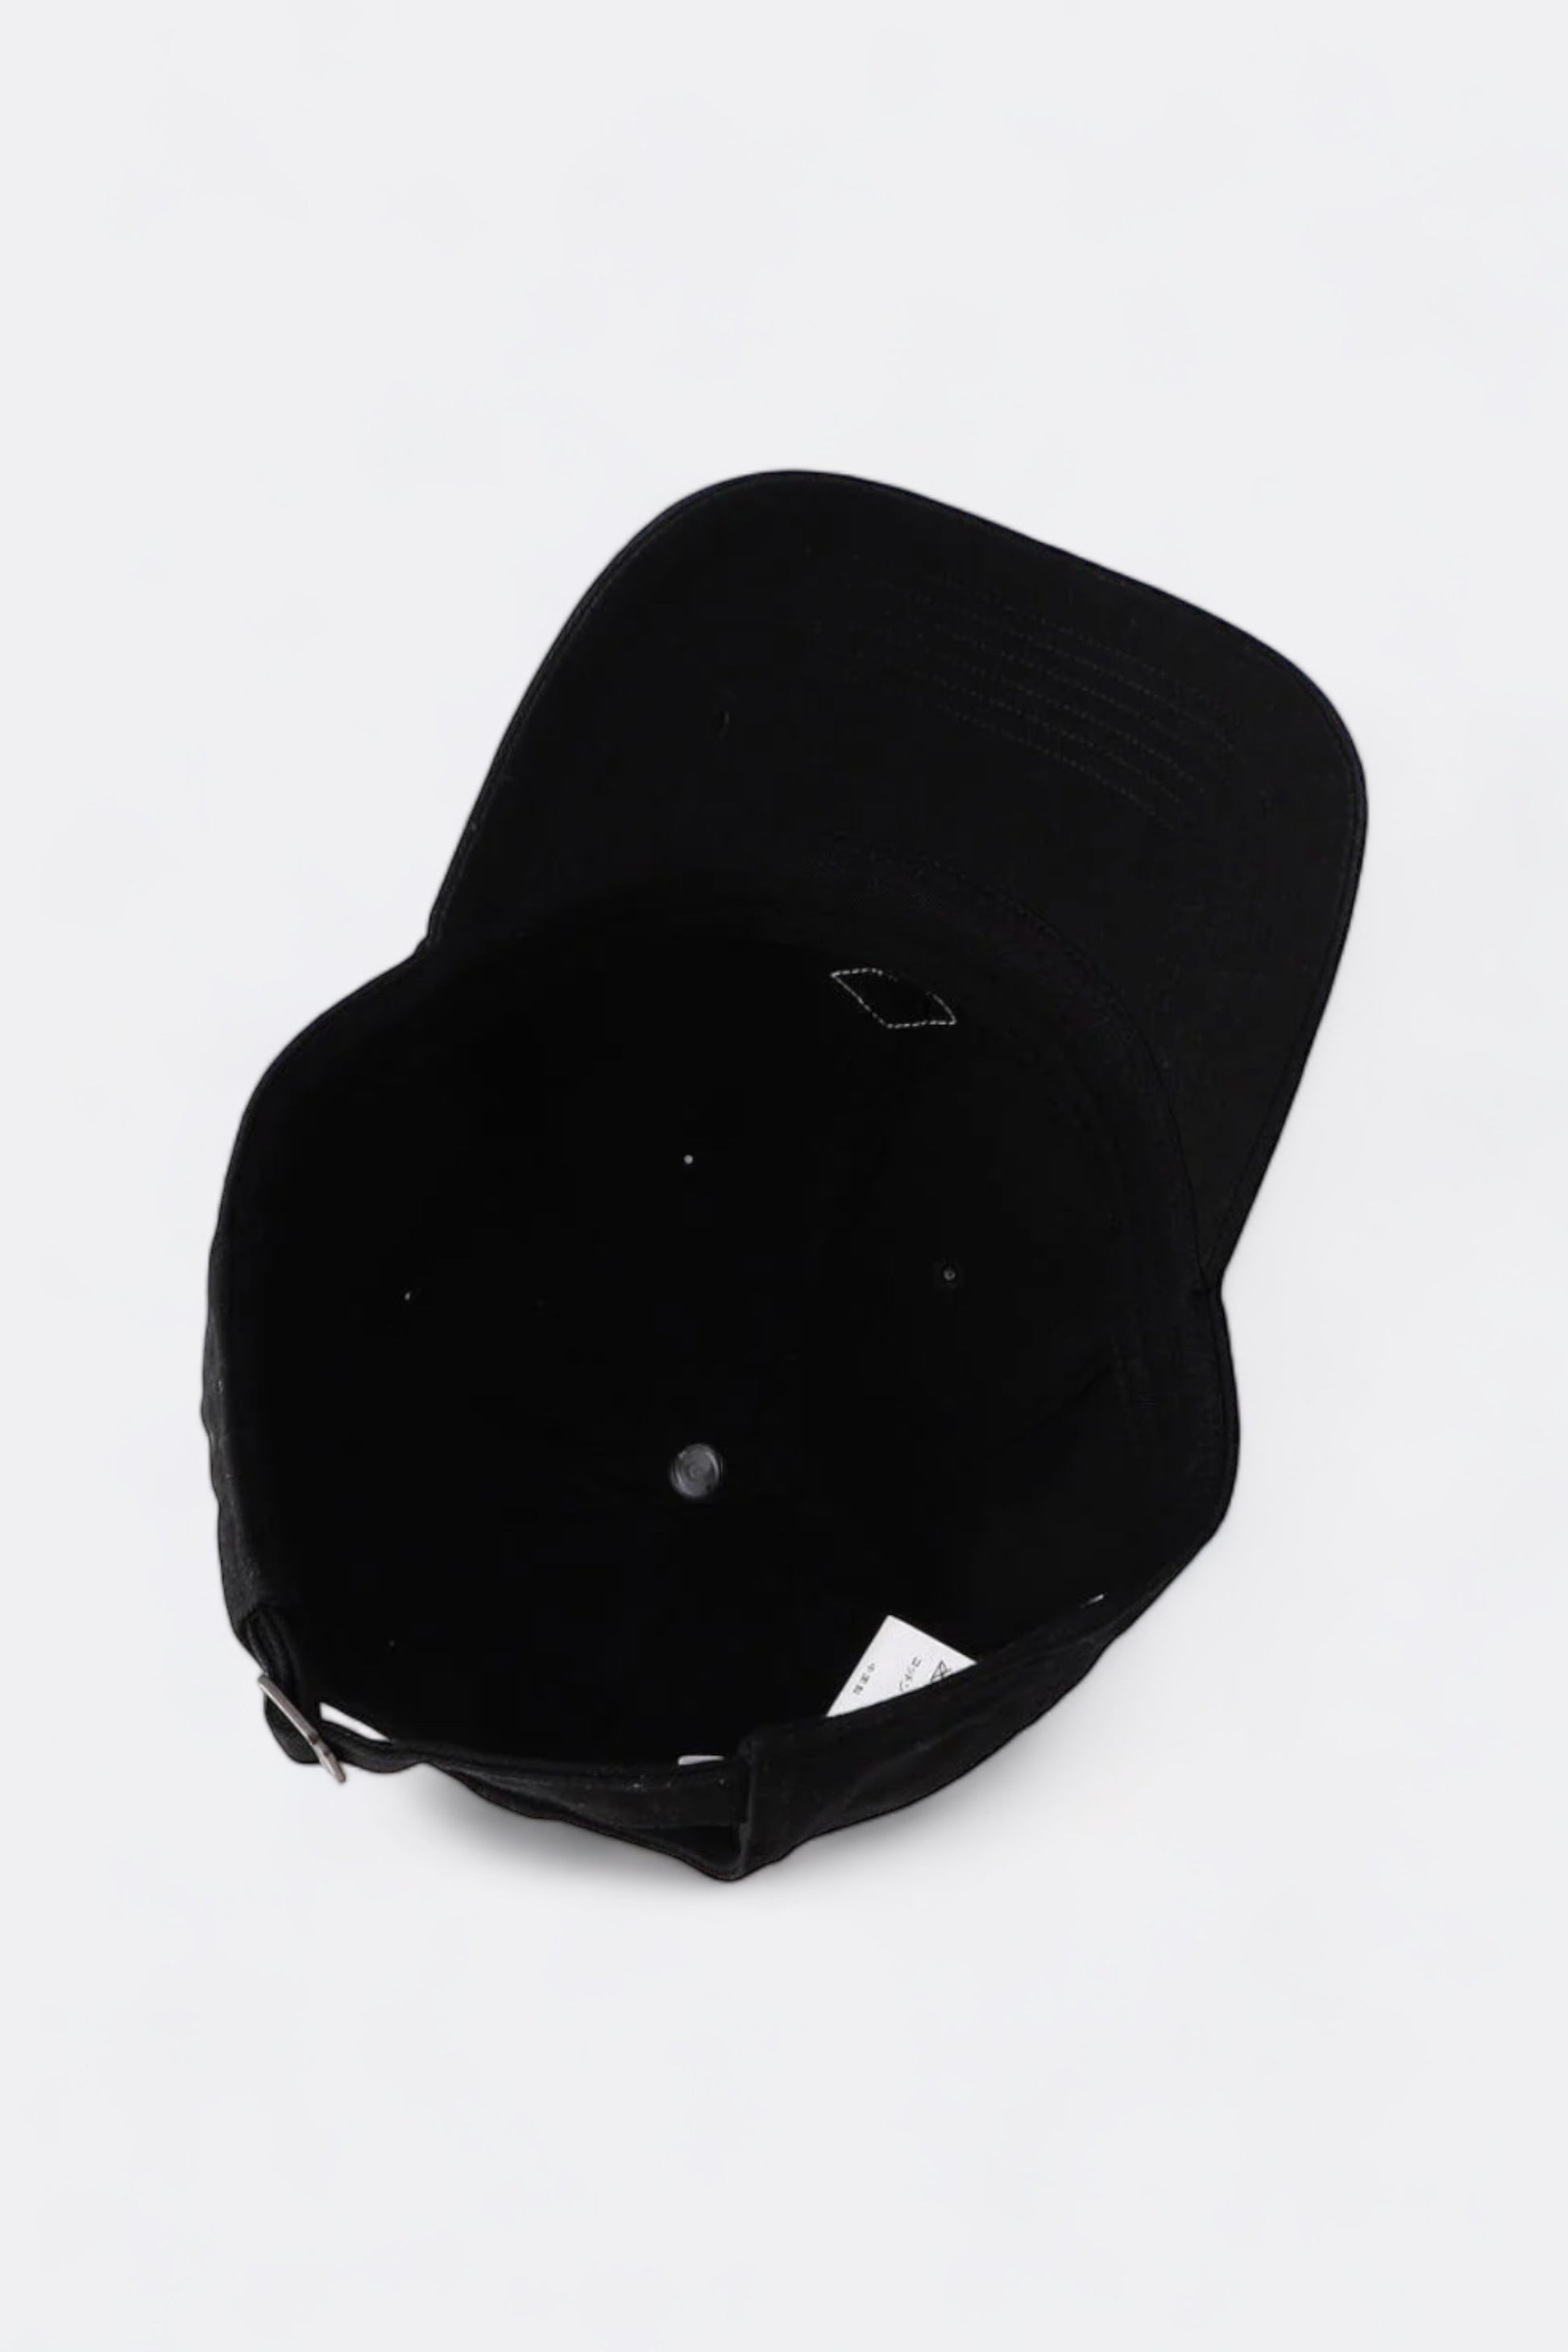 Danton - Chino Cloth 6 Panel Cap (Black)